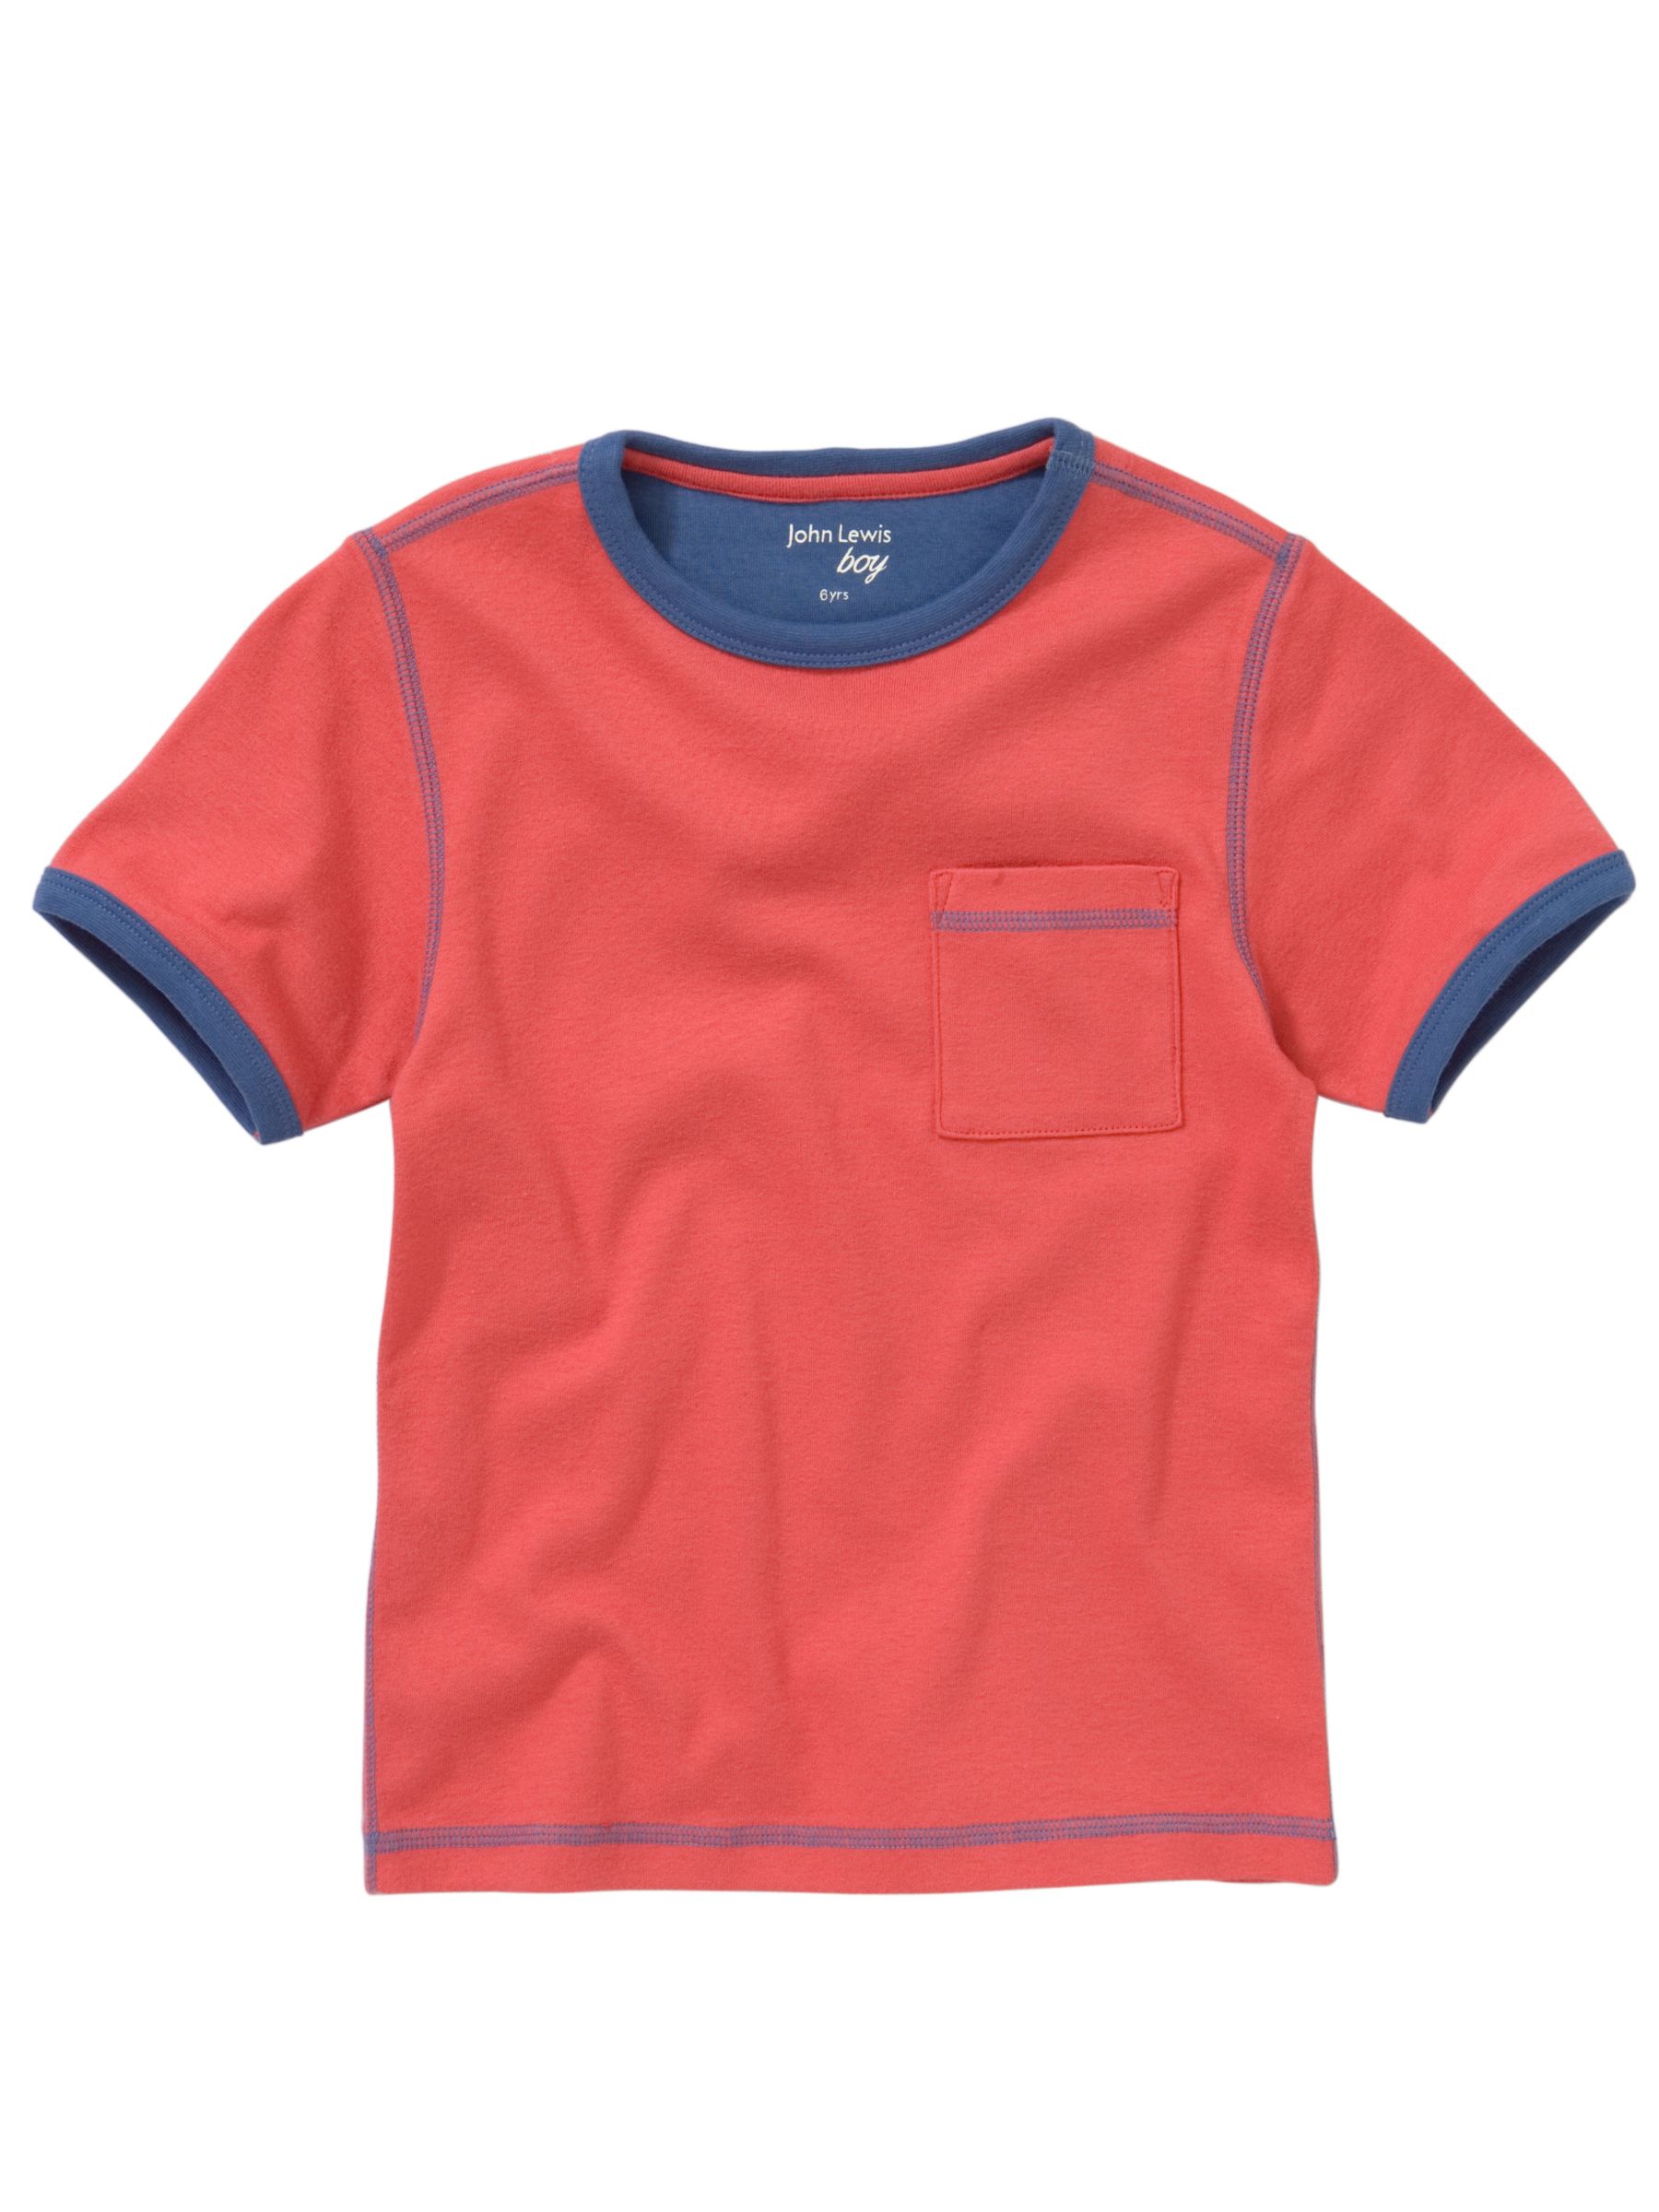 John Lewis Boy Short Sleeve T-Shirt, Red, 7 years